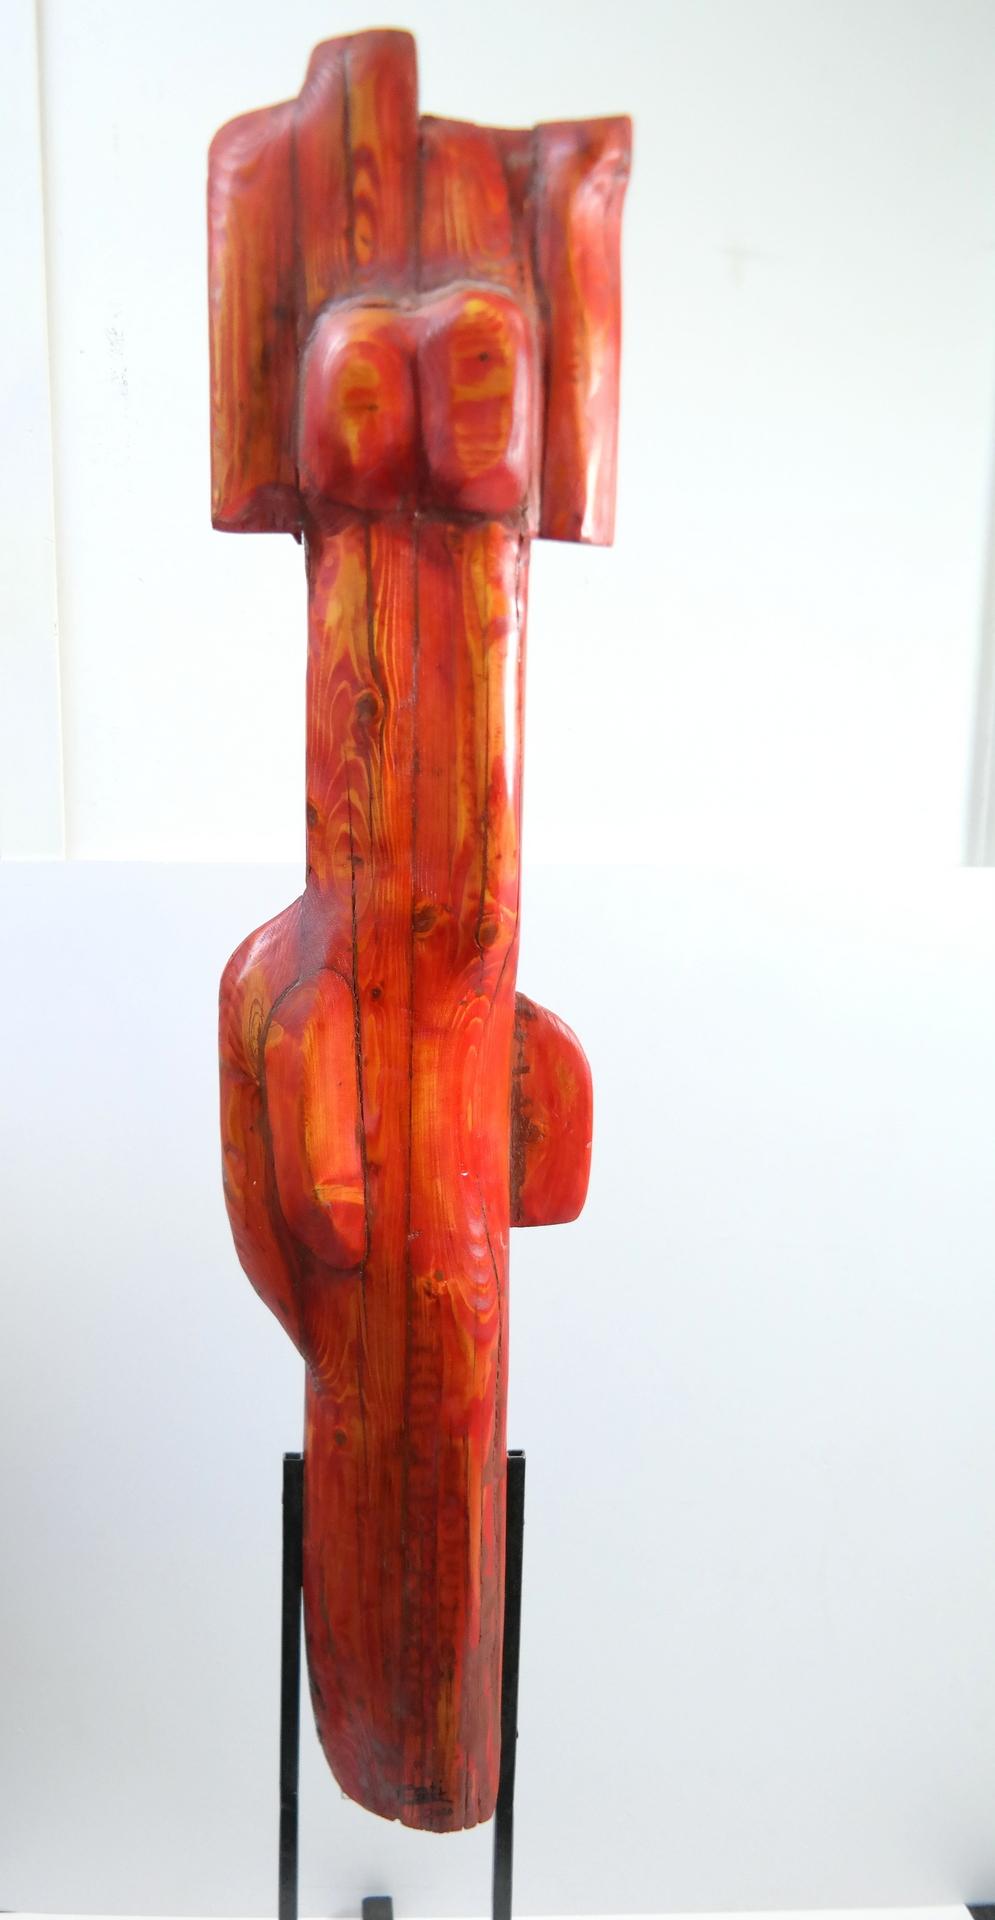 Nude-Contemporary wooden sculpture by Eszter Szabó.